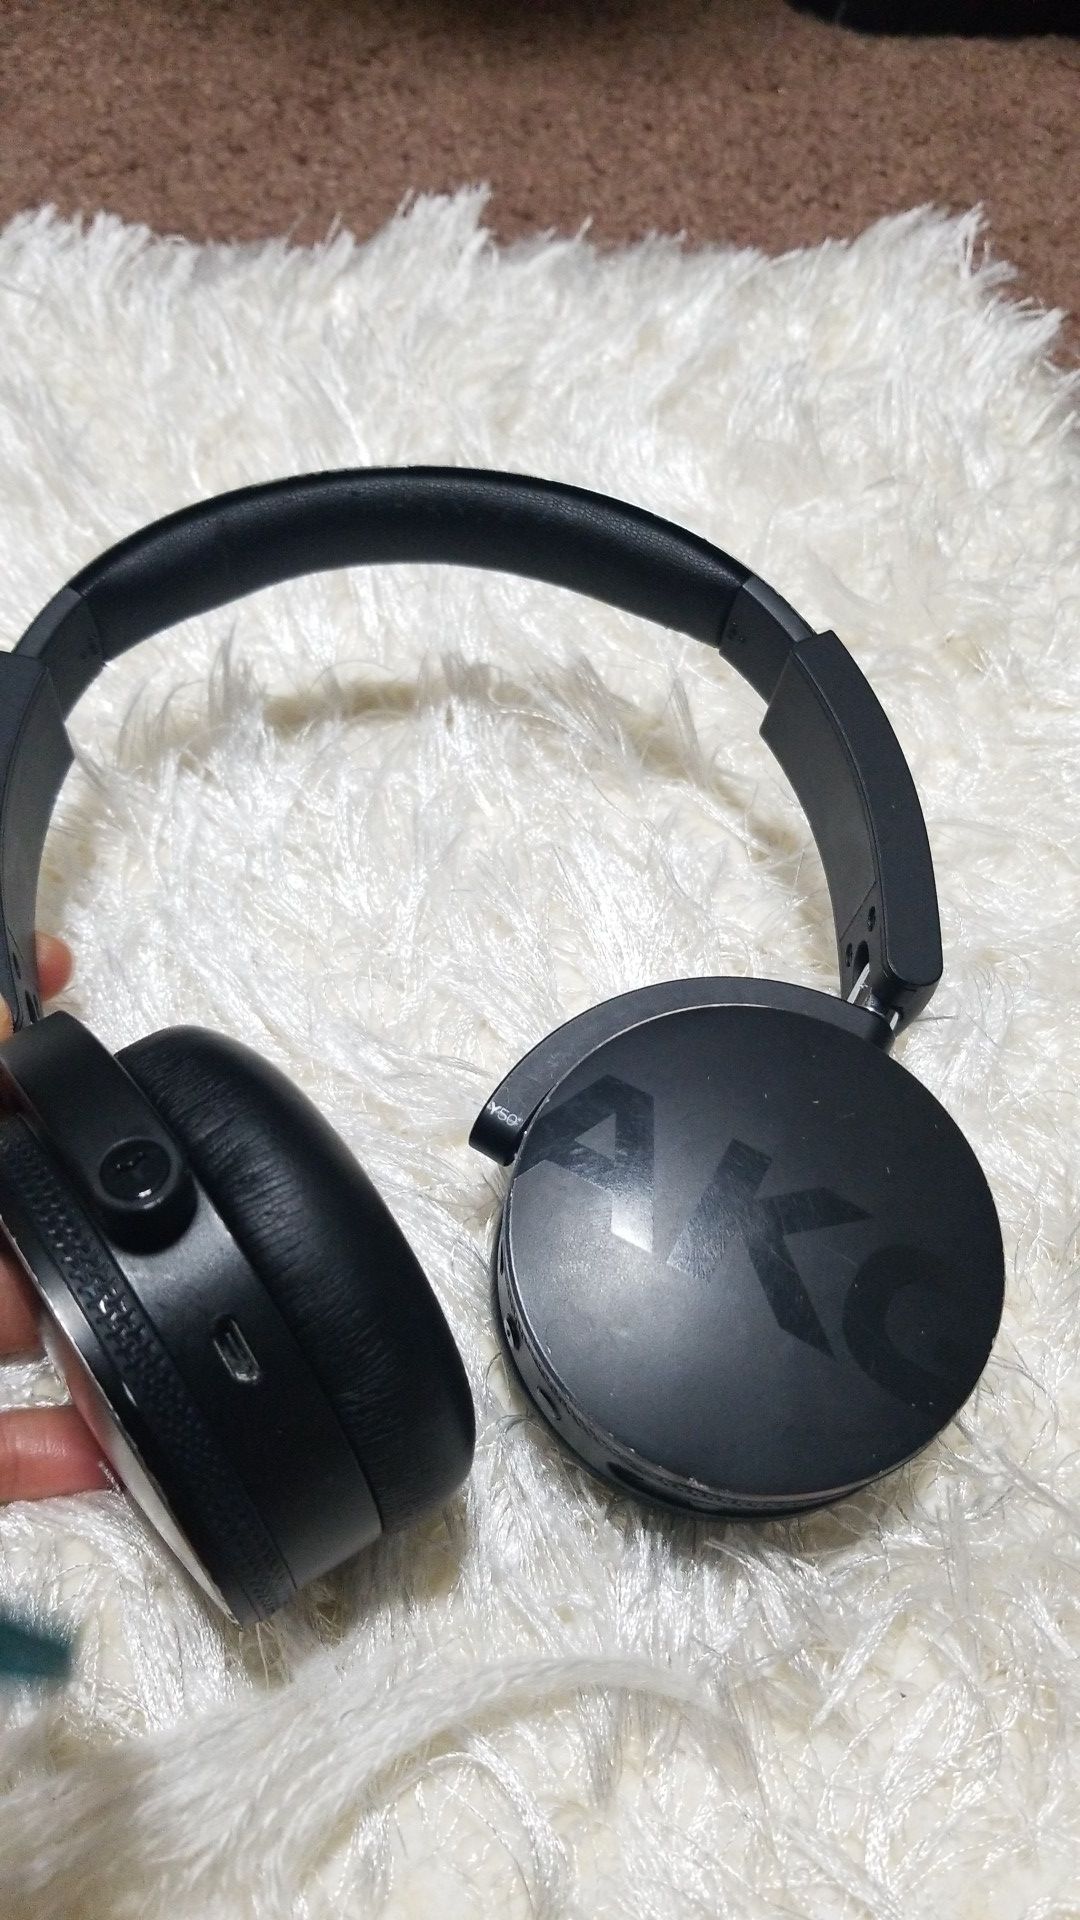 AKG wireless bluetooth headphones